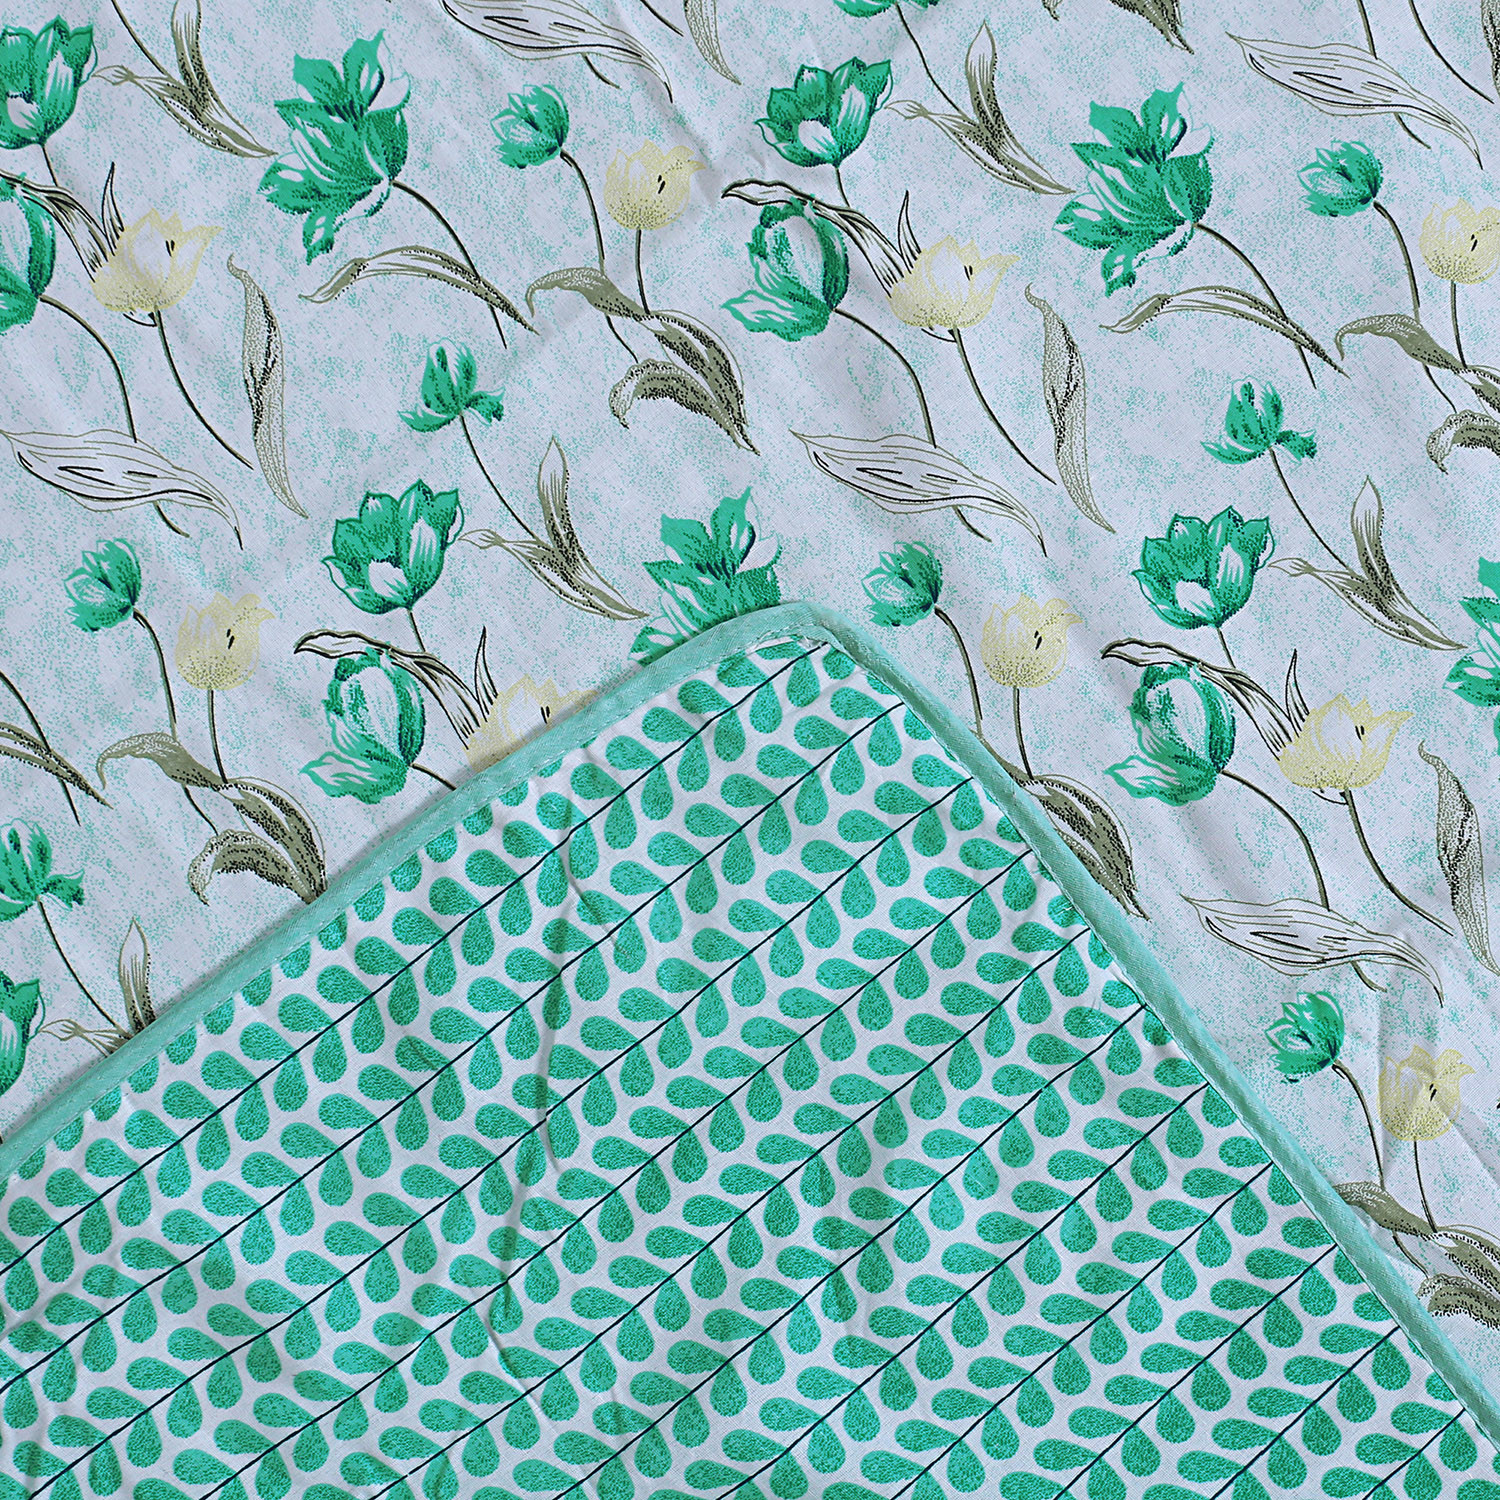 Kuber Industries Cotton Soft Lightweight Floral Design Reversible Single Bed Dohar | Blanket | AC Quilt for Home & Travel (Green)